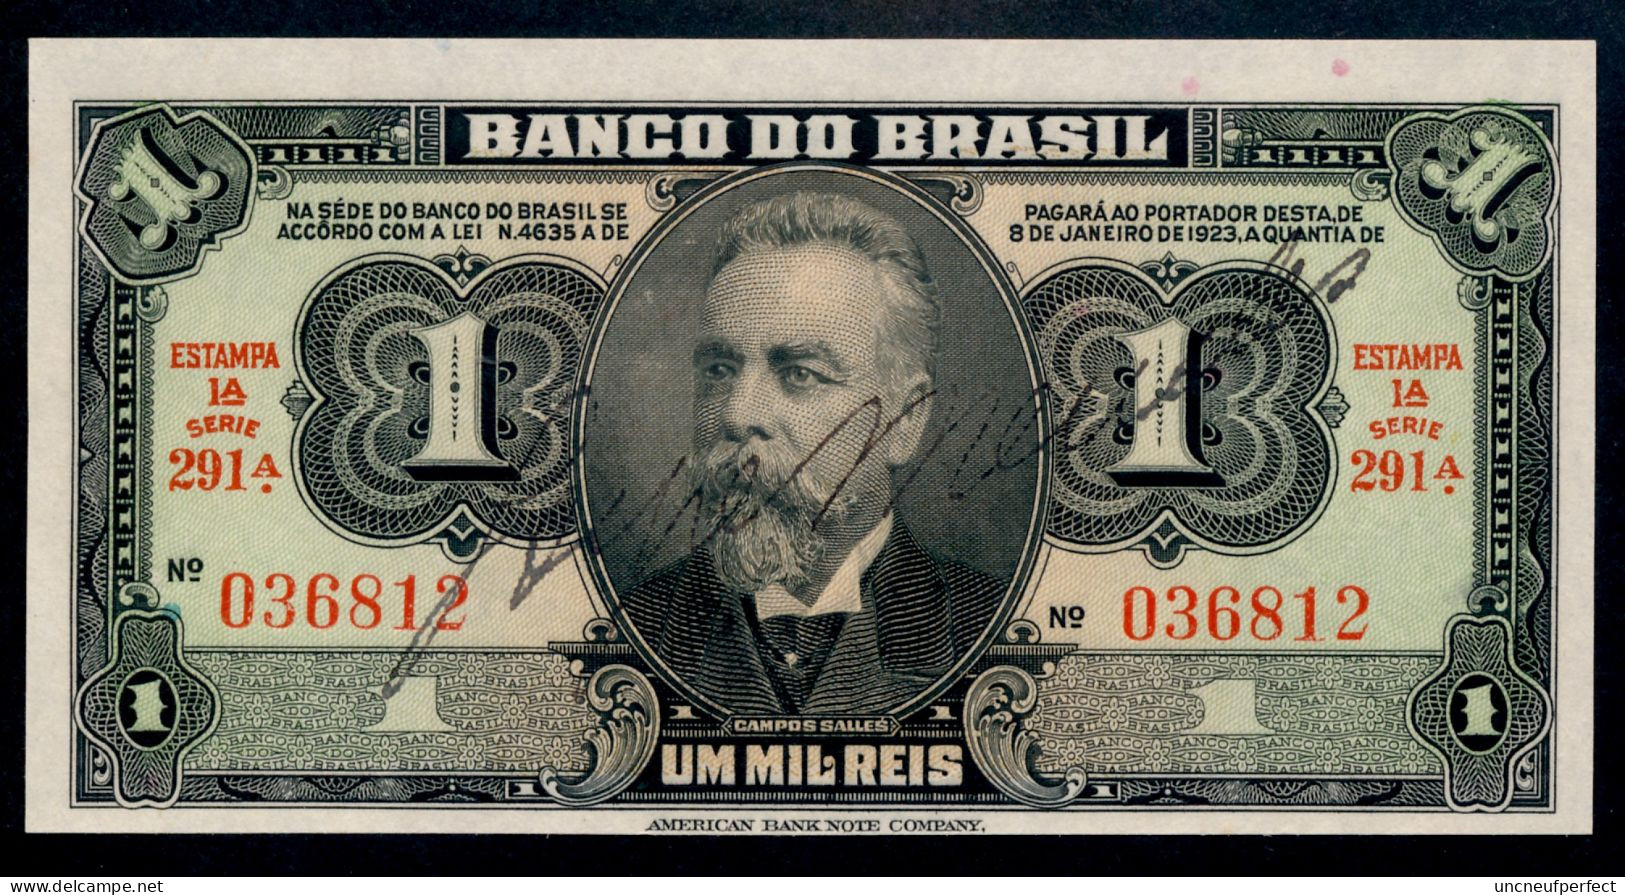 Brésil P 131a (1944) 1 MIL REIS - UNC - Série 291 N° 036812 RARE!!! - Brasil